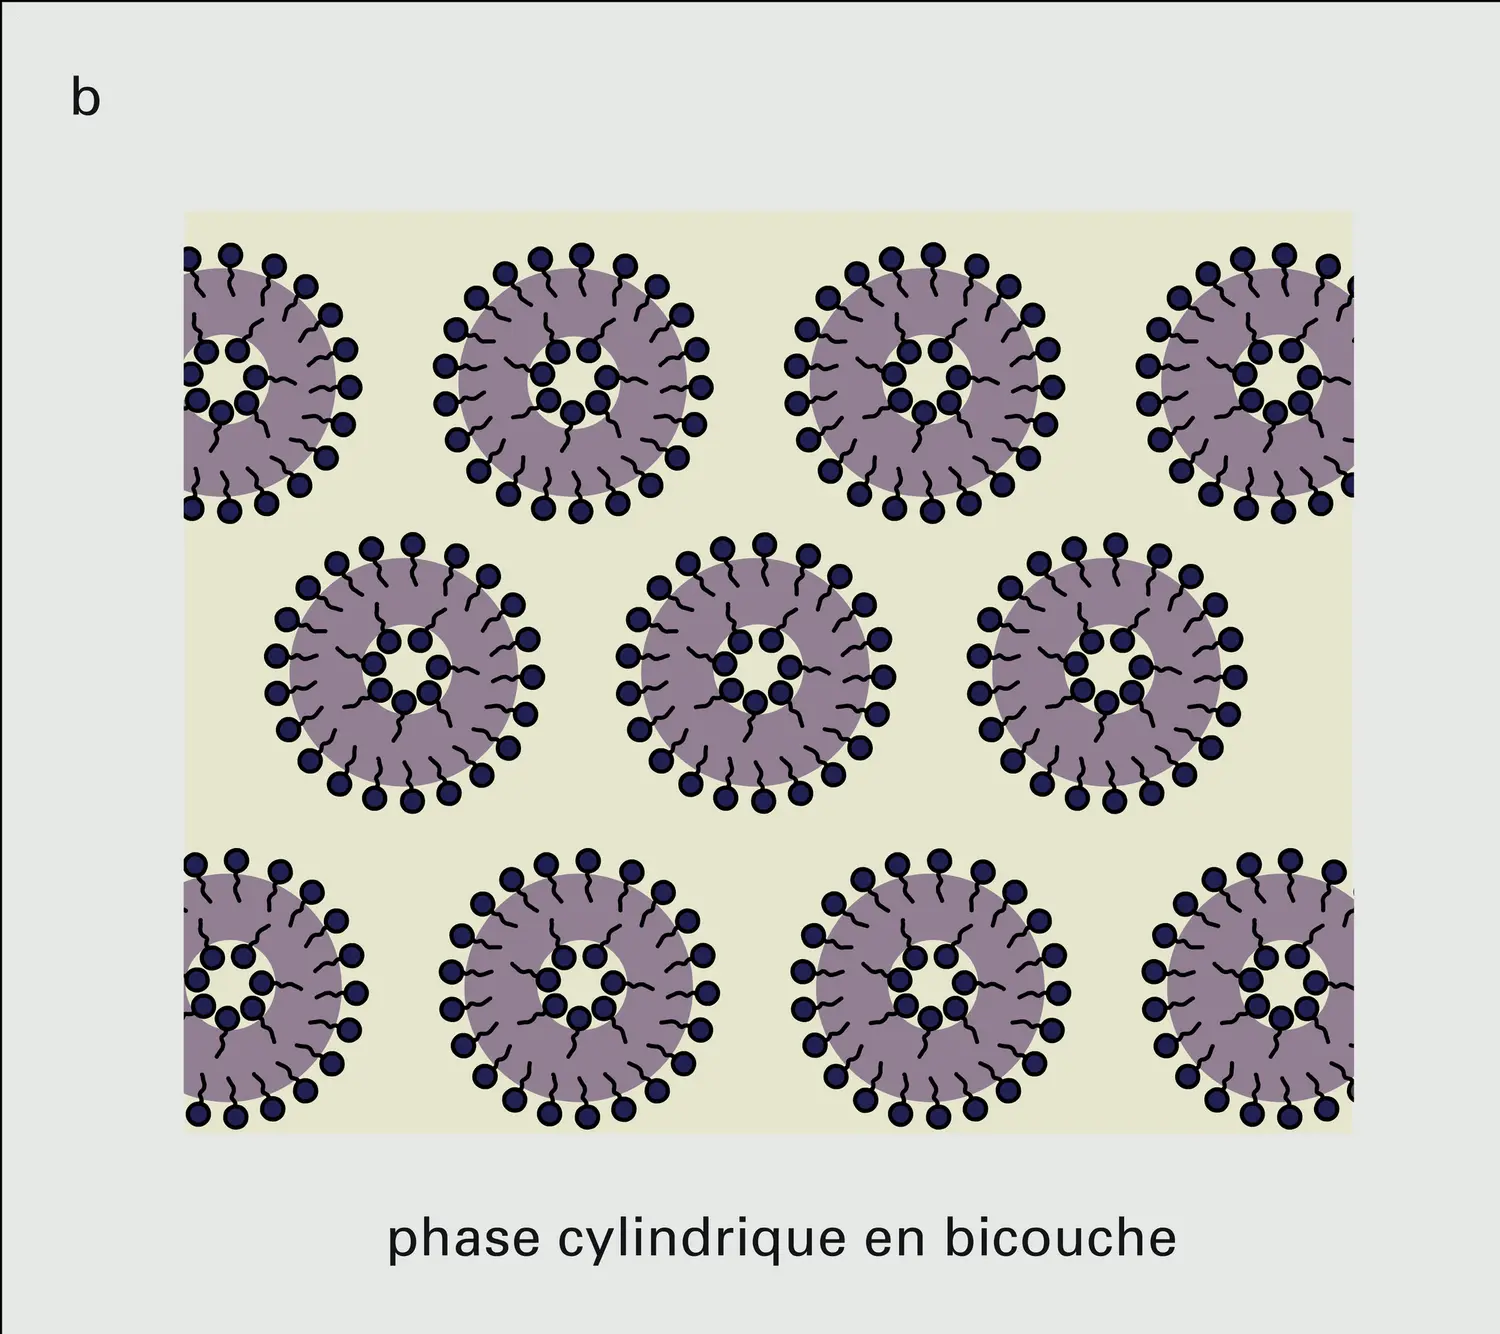 Principales phases de cristaux liquides lyotropes - vue 2